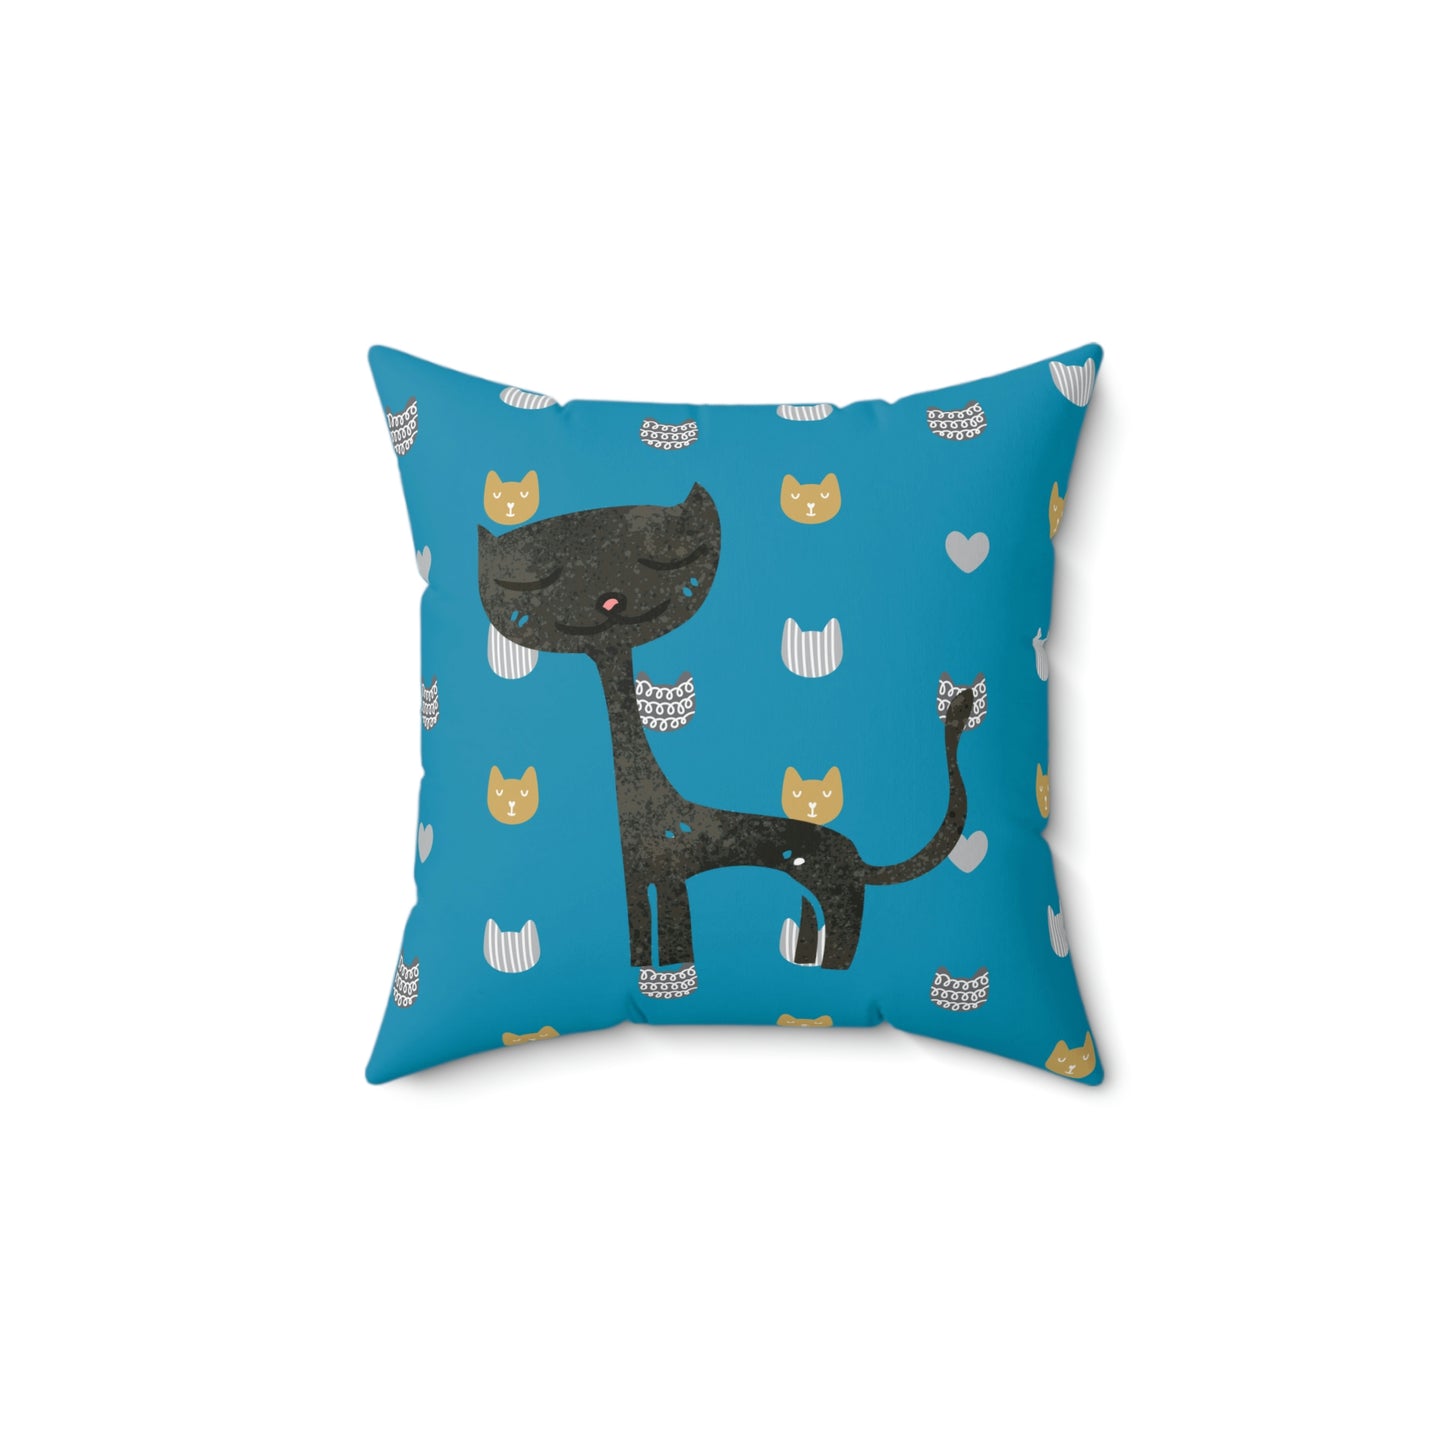 Cats & Heats patten Black Cat Design Spun Polyester Square Indoor Pillow